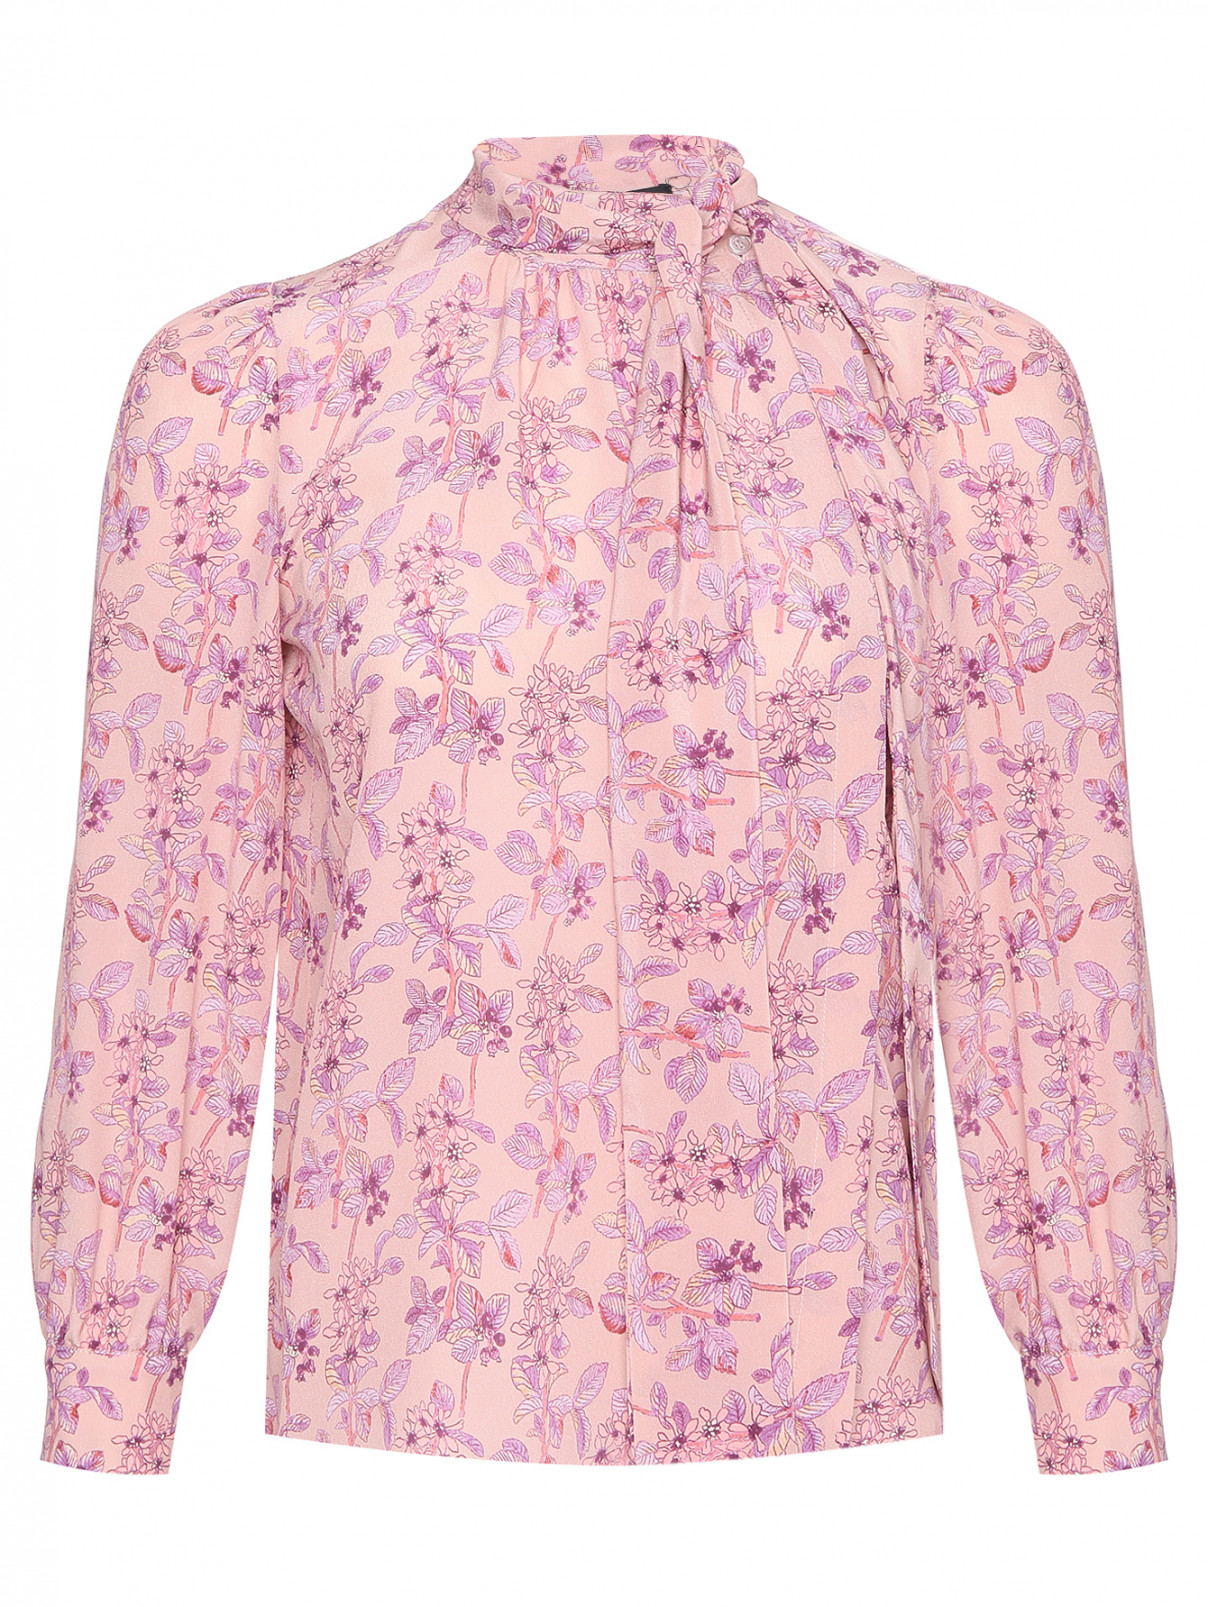 Блуза из шелка с узором Weekend Max Mara  –  Общий вид  – Цвет:  Узор